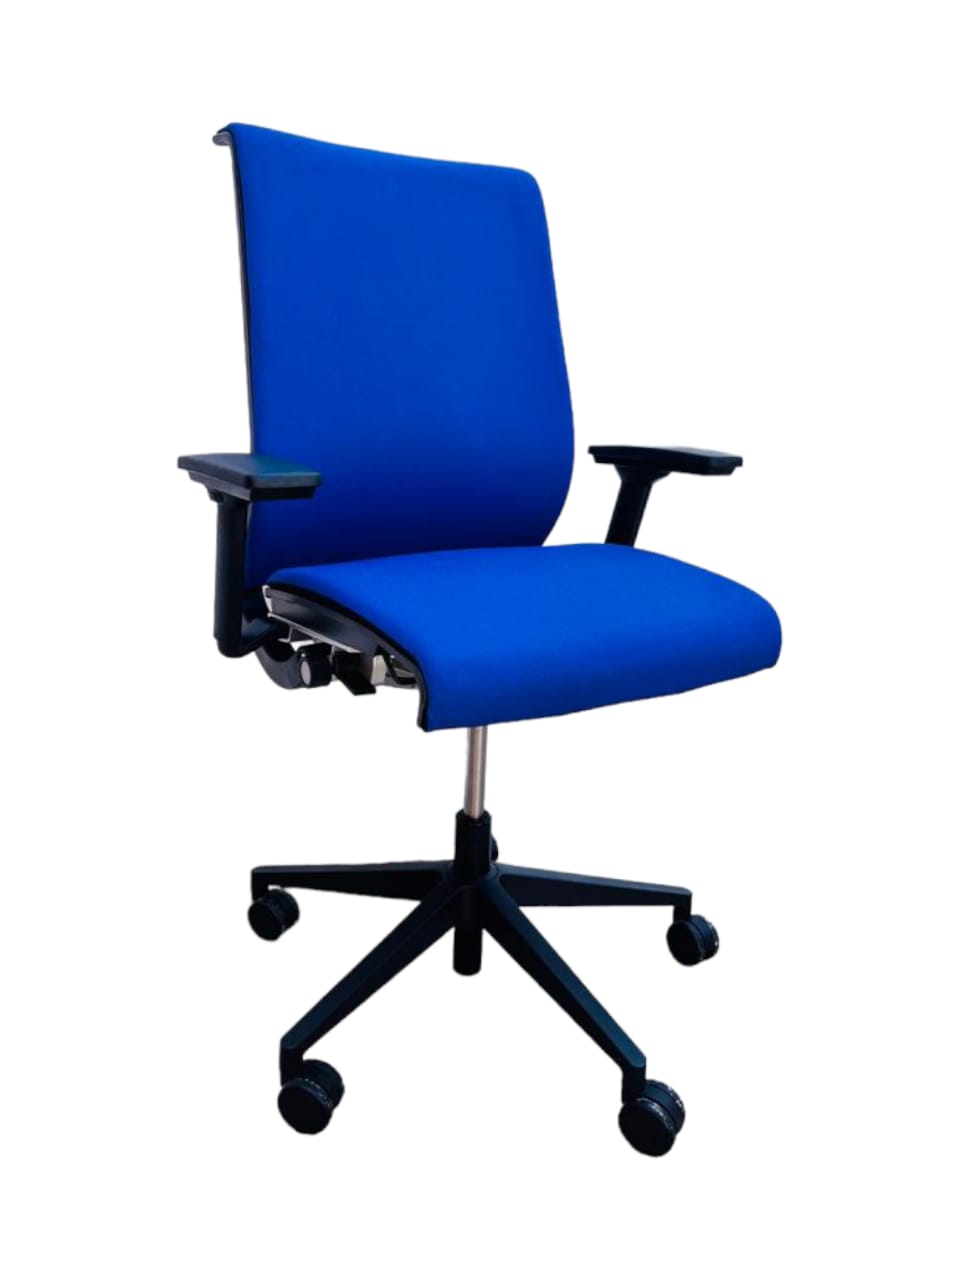 Chaise de bureau Steelcase thinks bleu